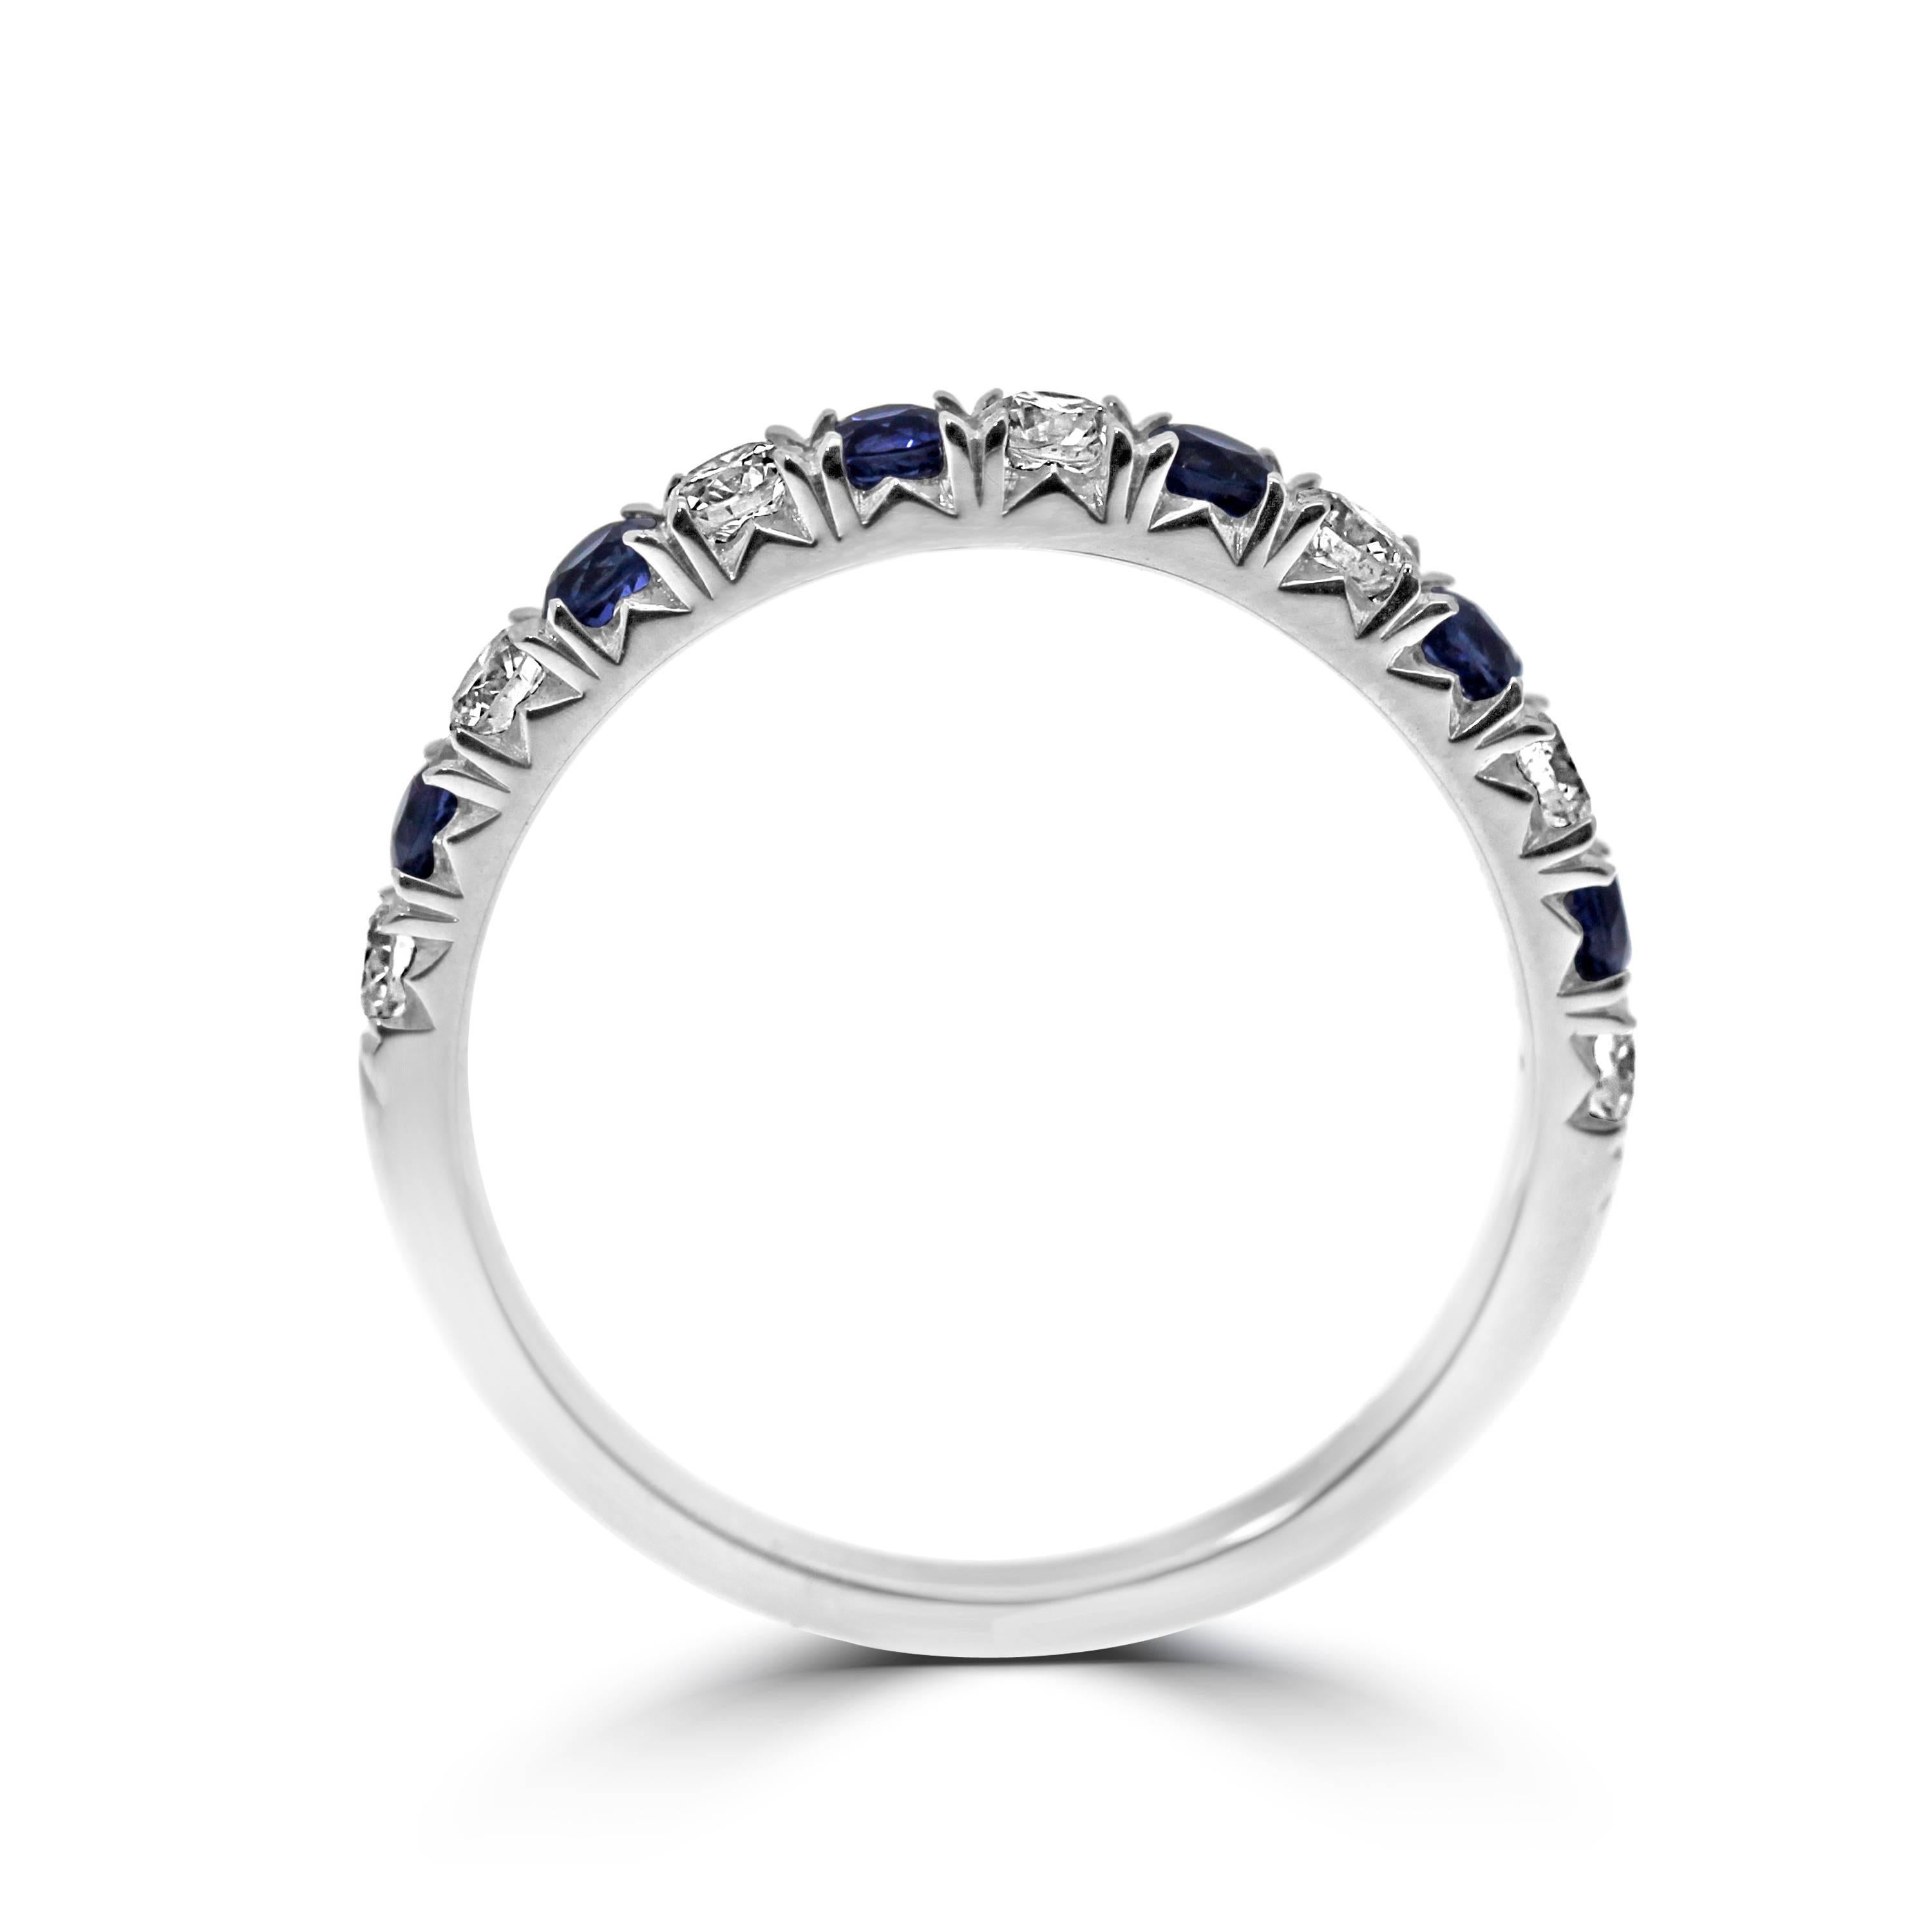 Round Cut 18K White Gold Eternity Band Ring Half Set Diamonds and Blue Sapphire gemstones